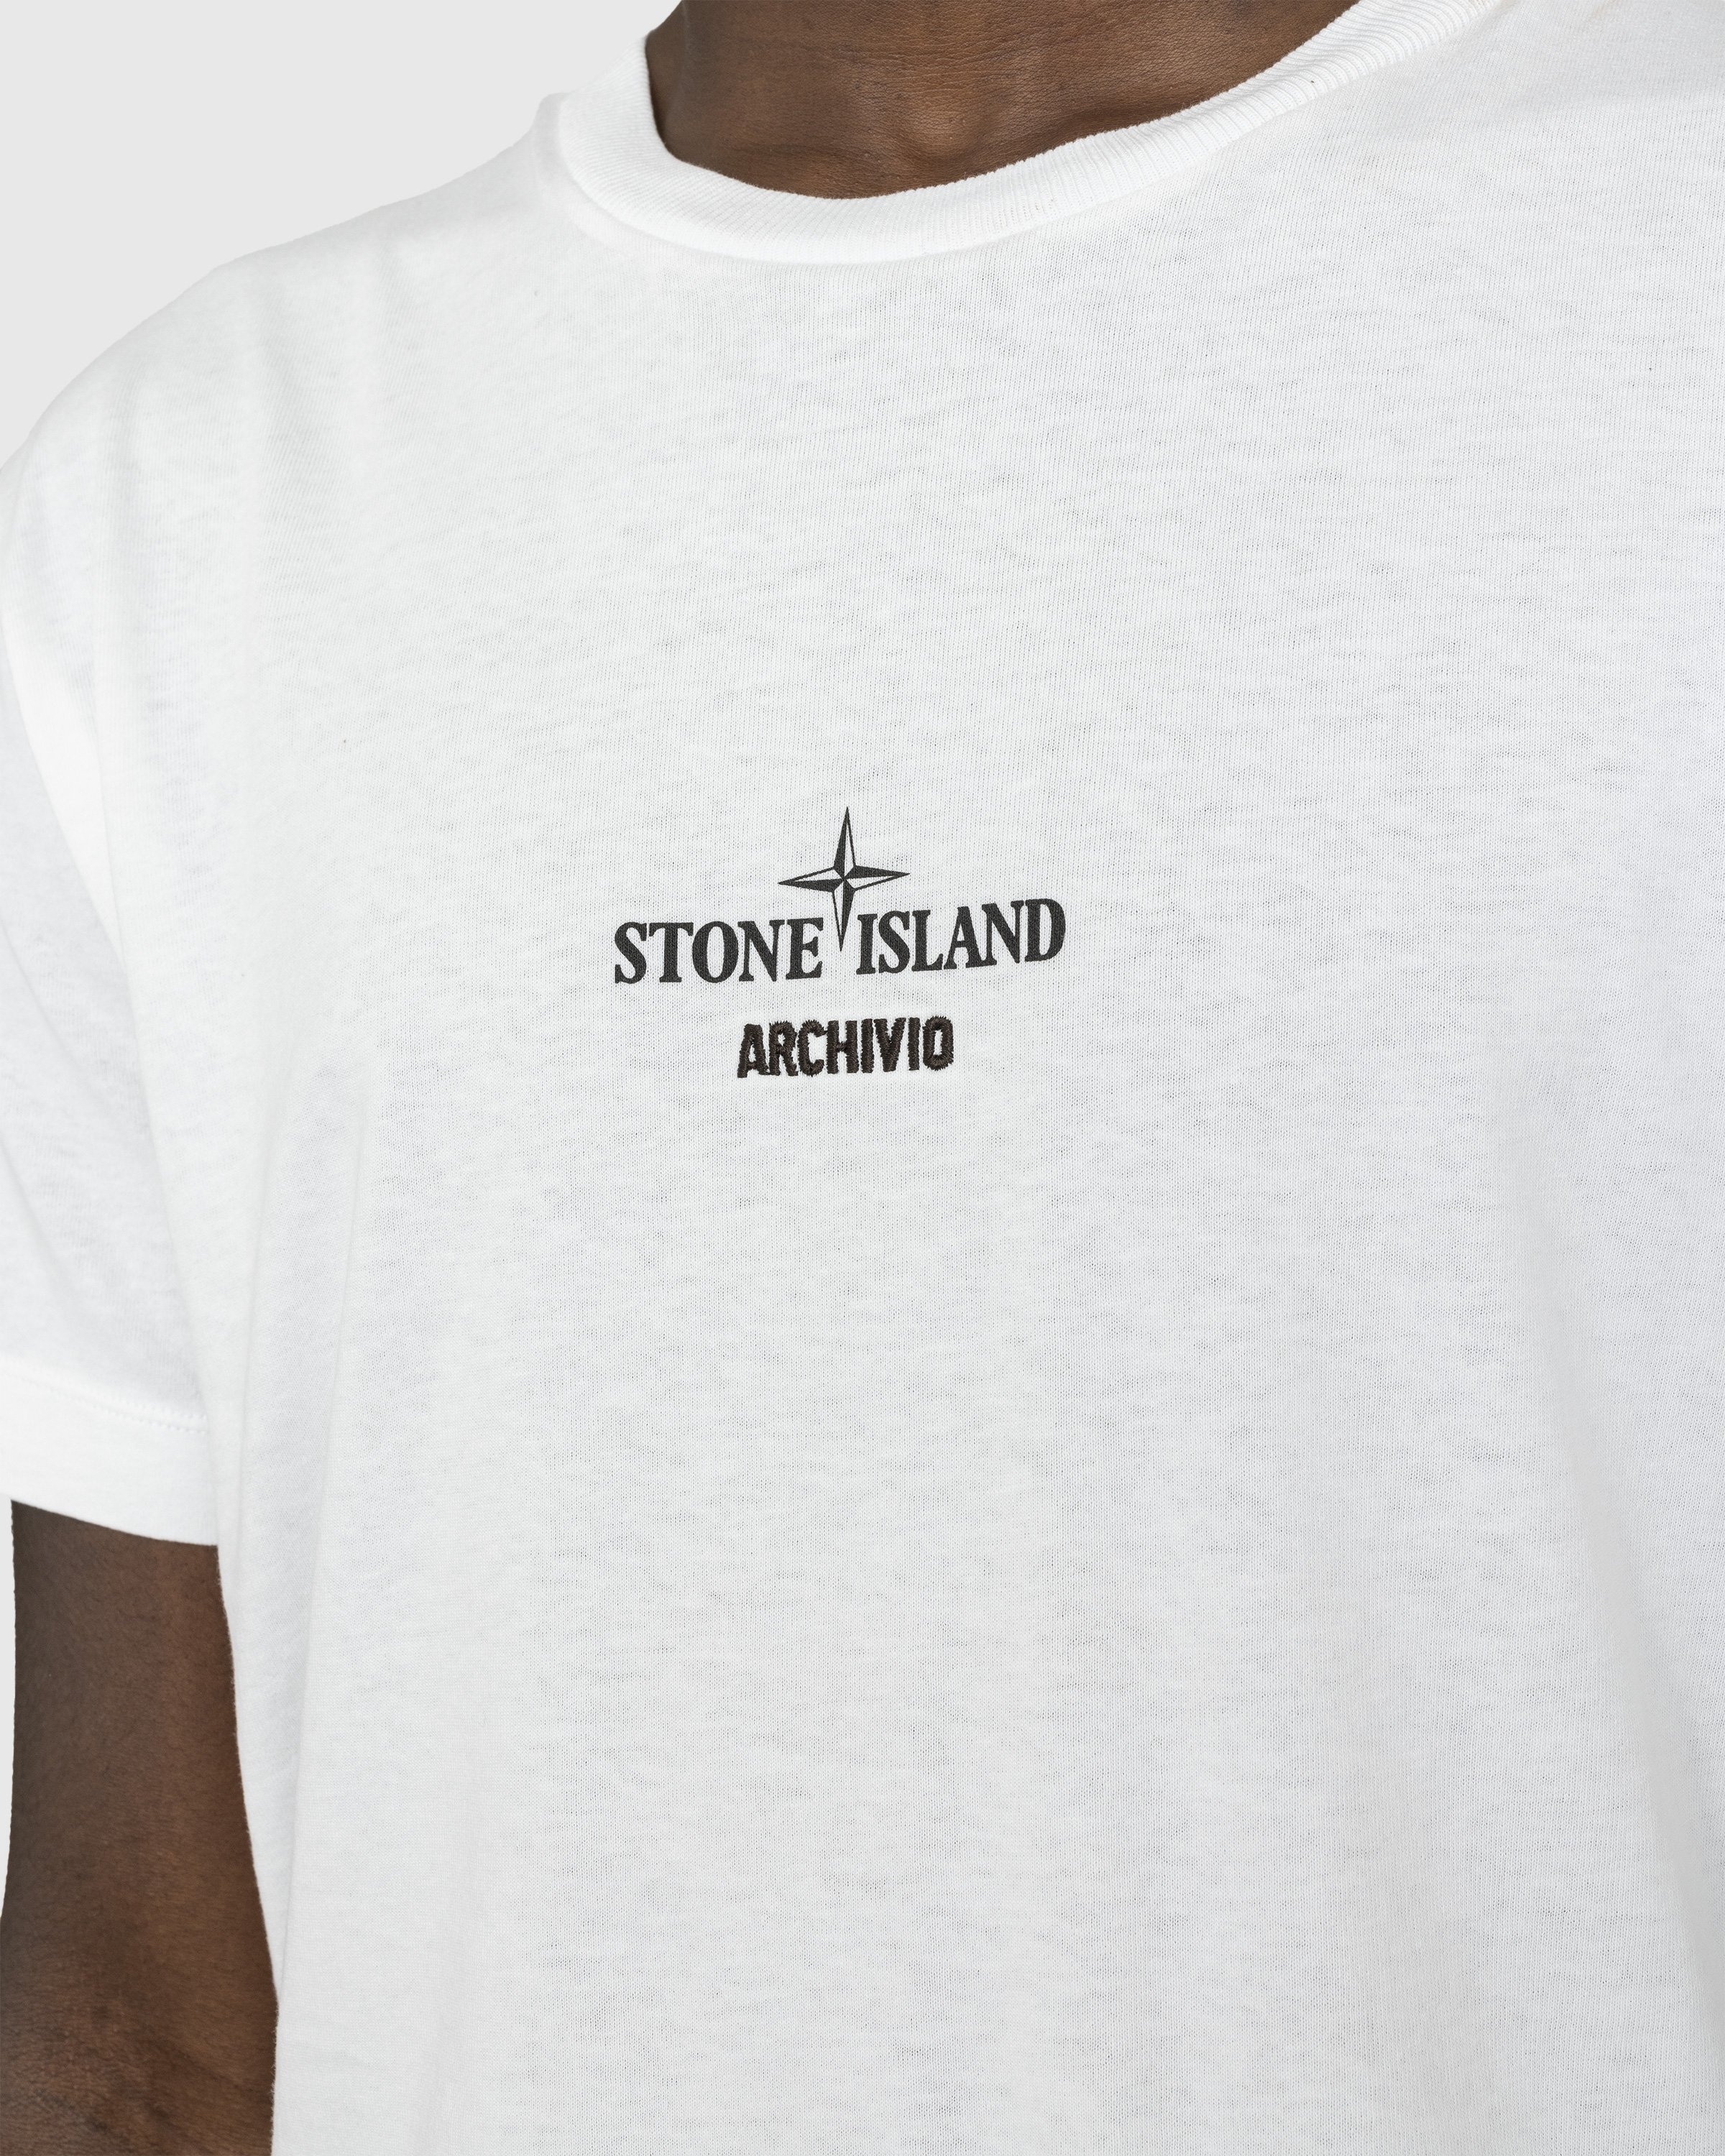 Stone Island - Archivio Lino Watro T-Shirt White - Clothing - White - Image 4